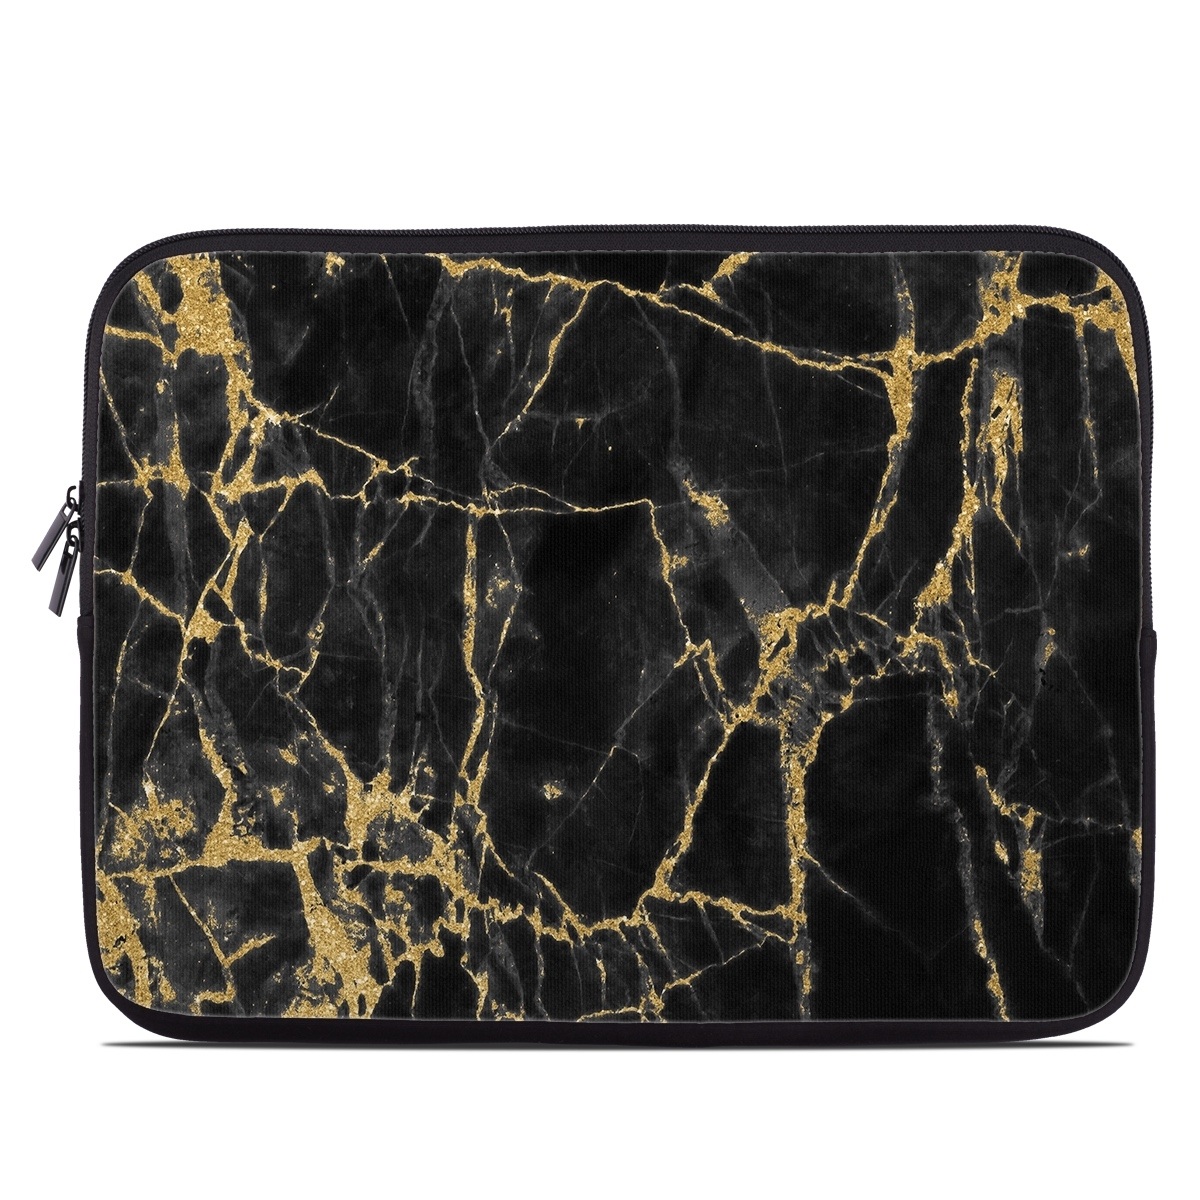 Laptop Sleeve - Black Gold Marble (Image 1)